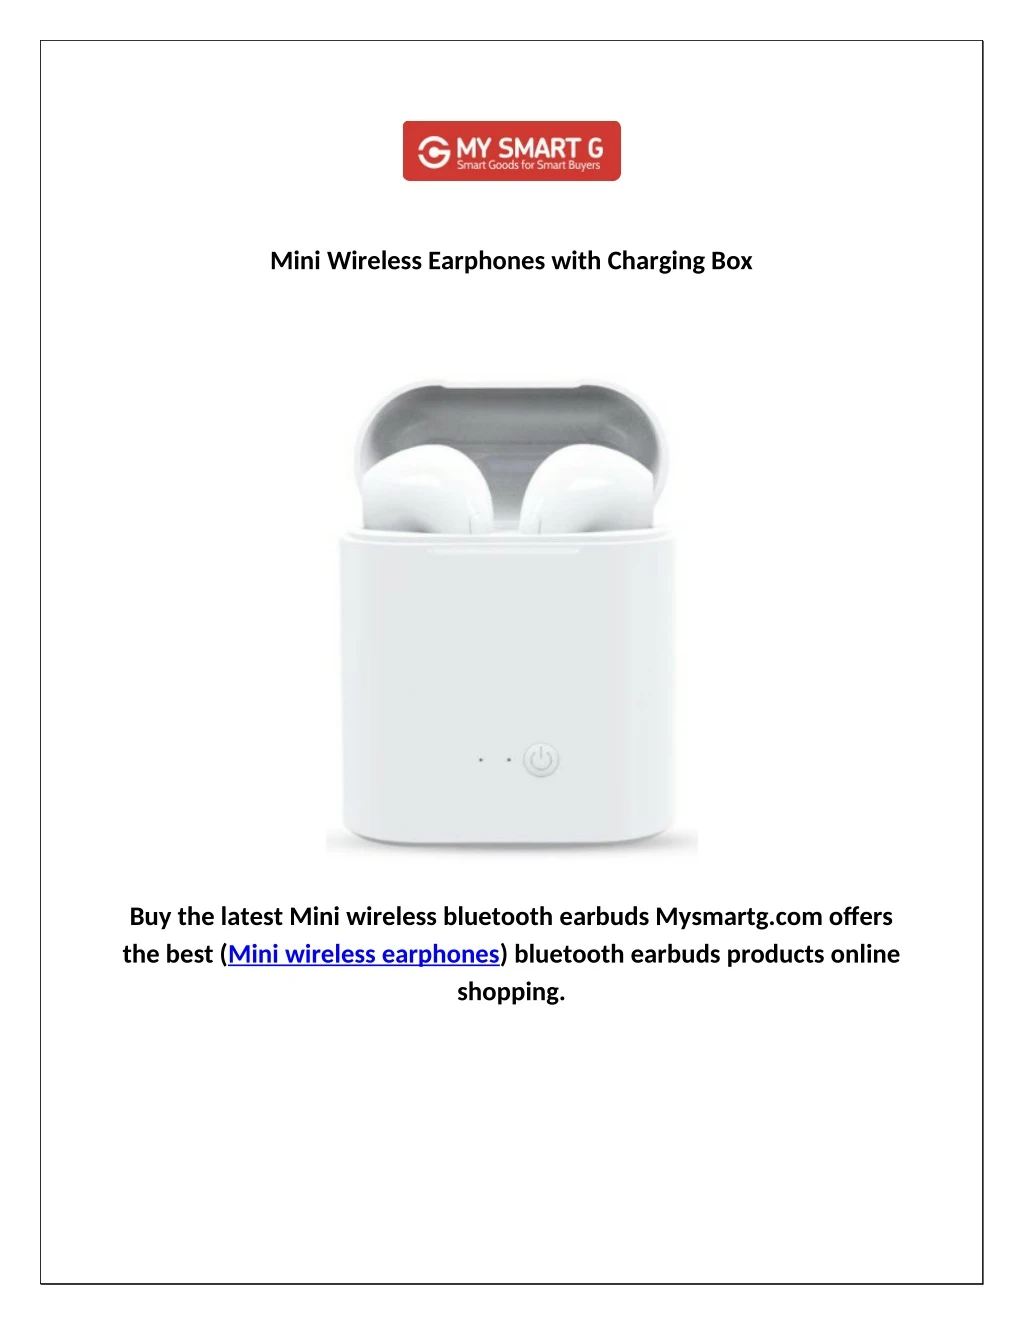 mini wireless earphones with charging box